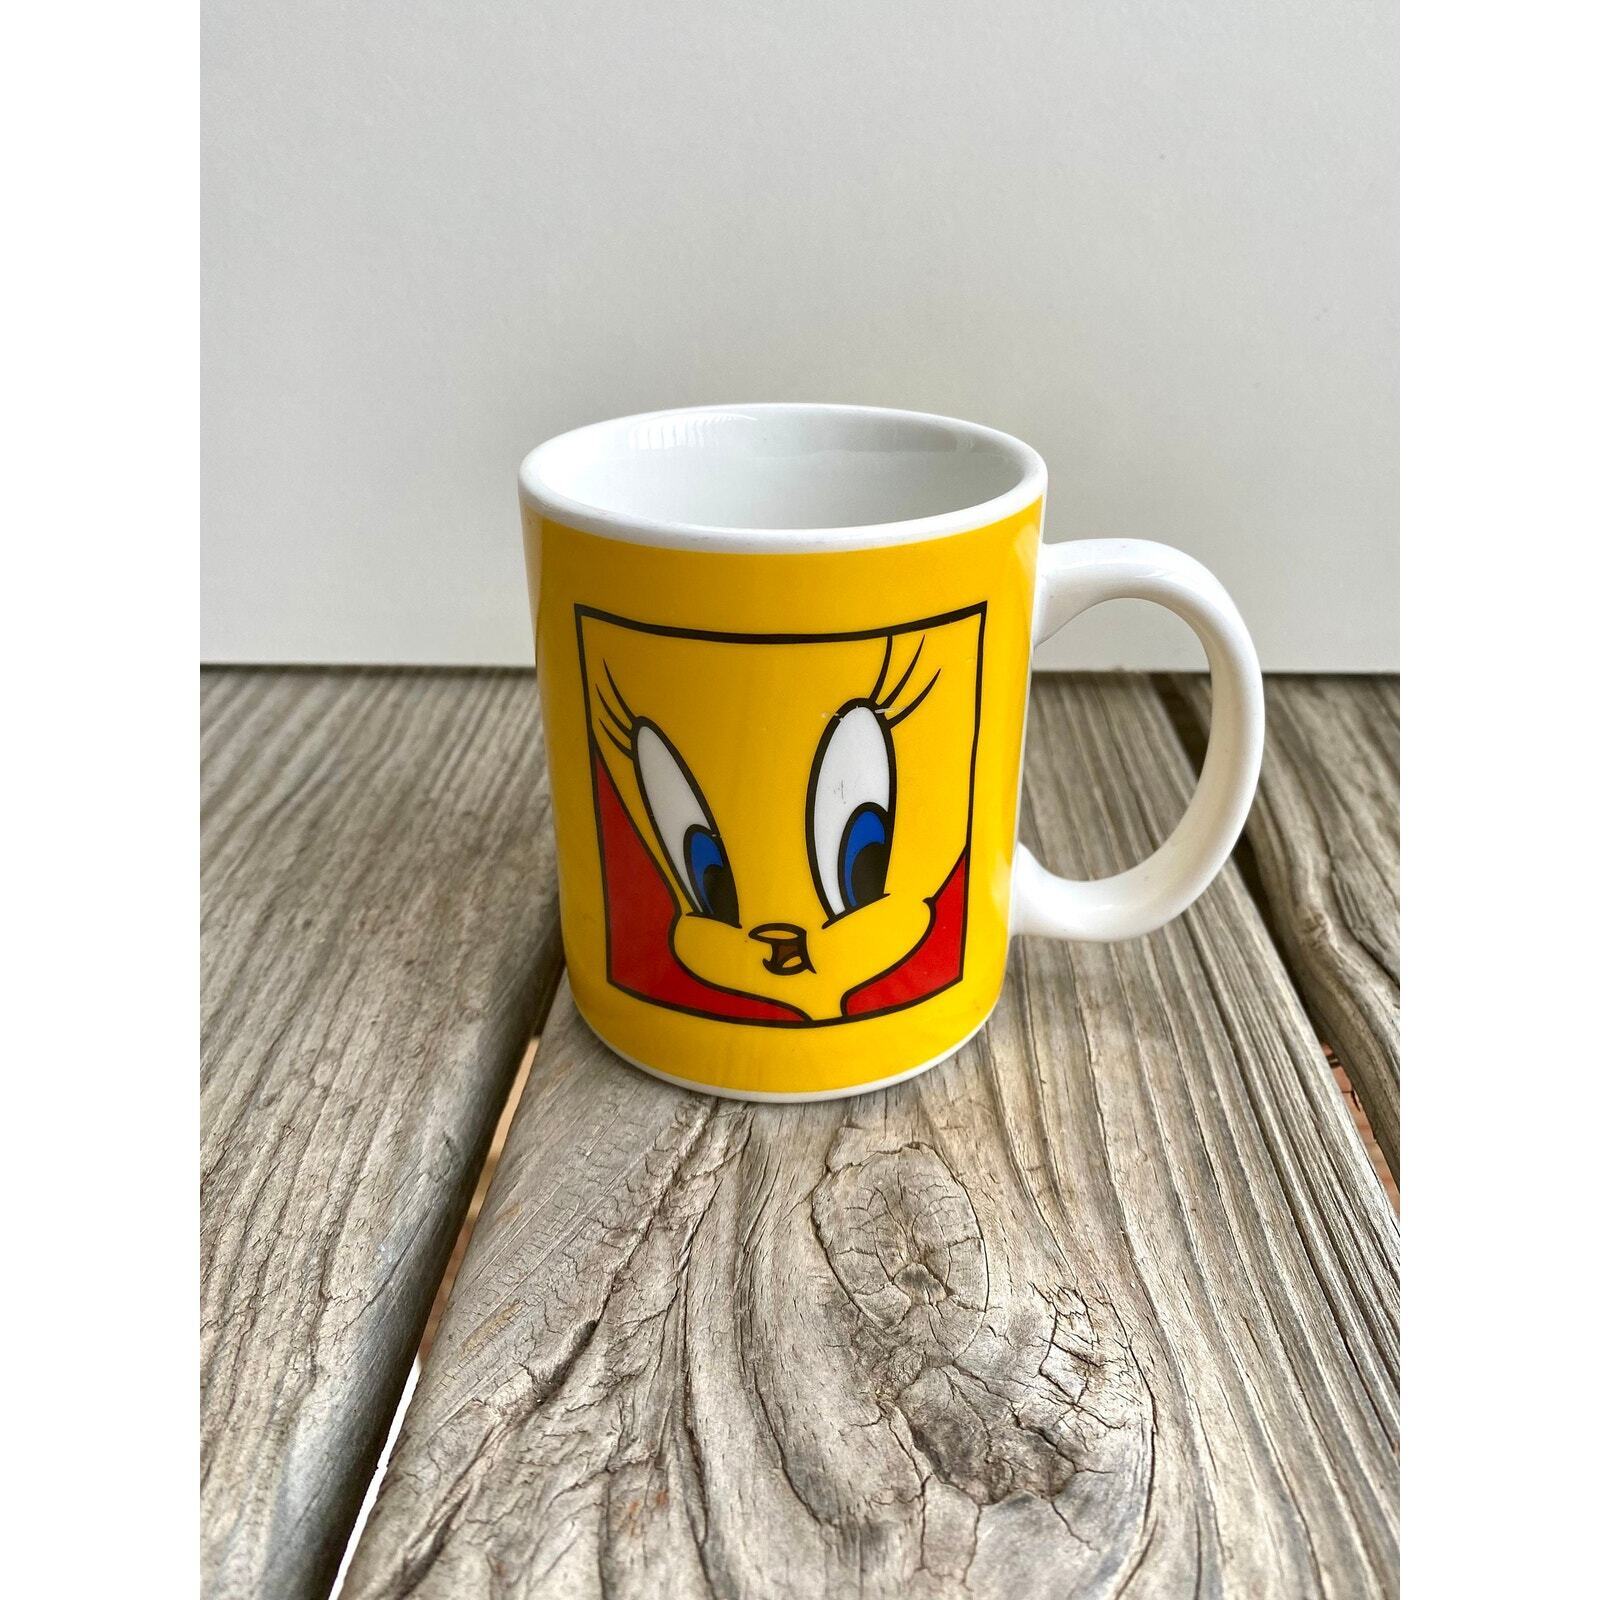 Vintage 1991 Tweety Looney Tunes Coffee Mug - Warner Bros - 12 oz. Canary Yellow